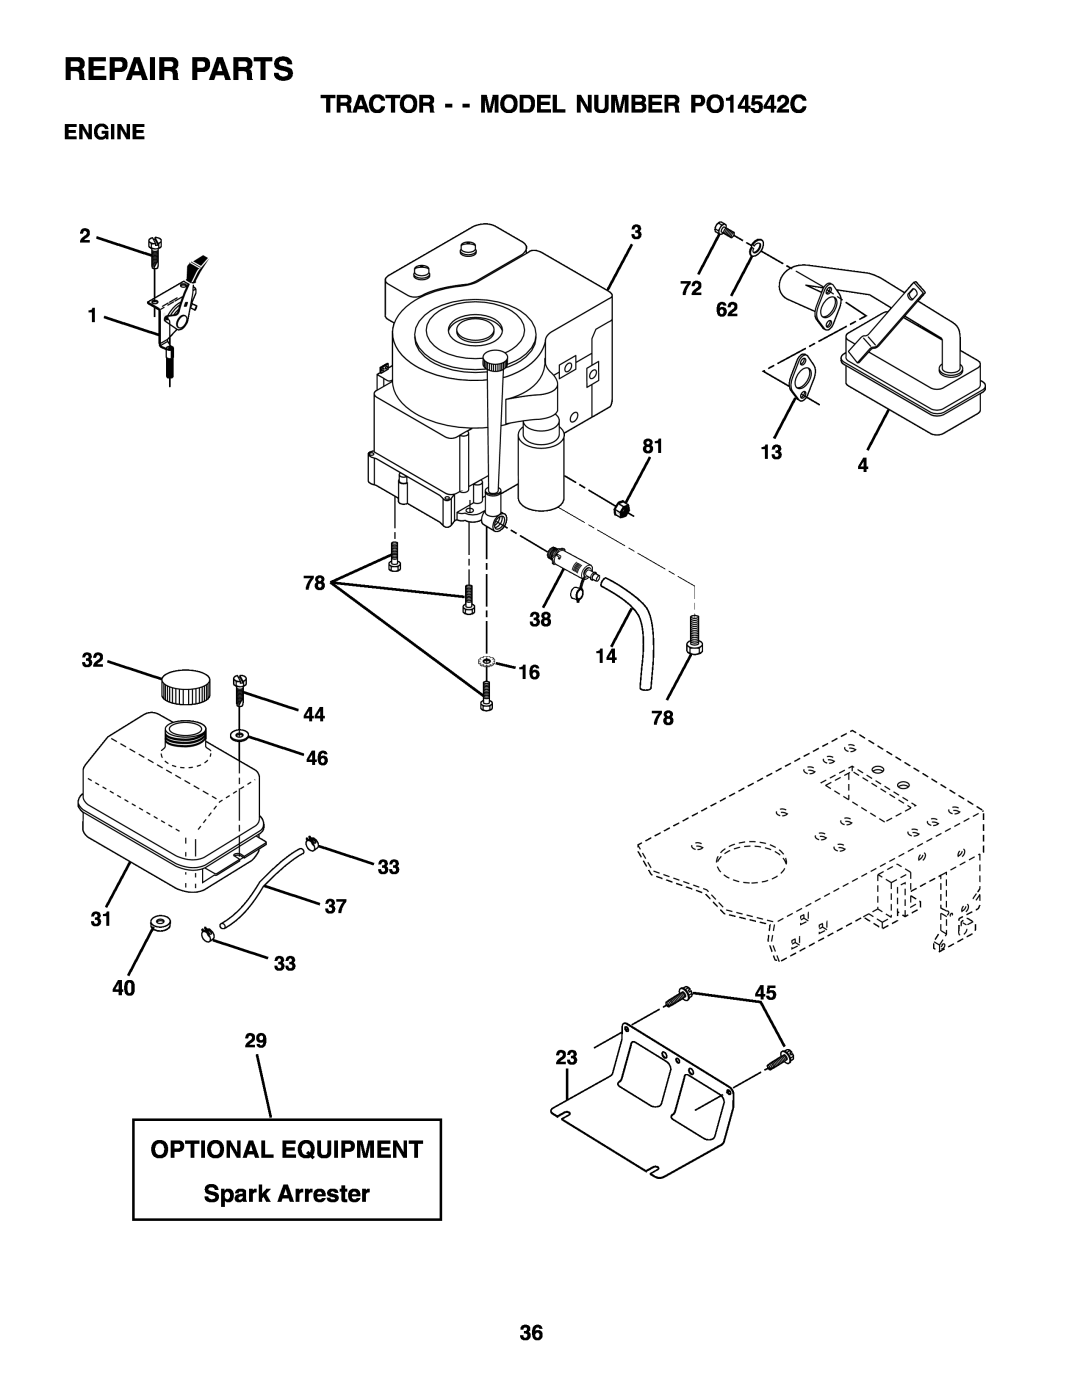 Poulan manual Repair Parts, TRACTOR - - MODEL NUMBER PO14542C, OPTIONAL EQUIPMENT Spark Arrester, Engine 